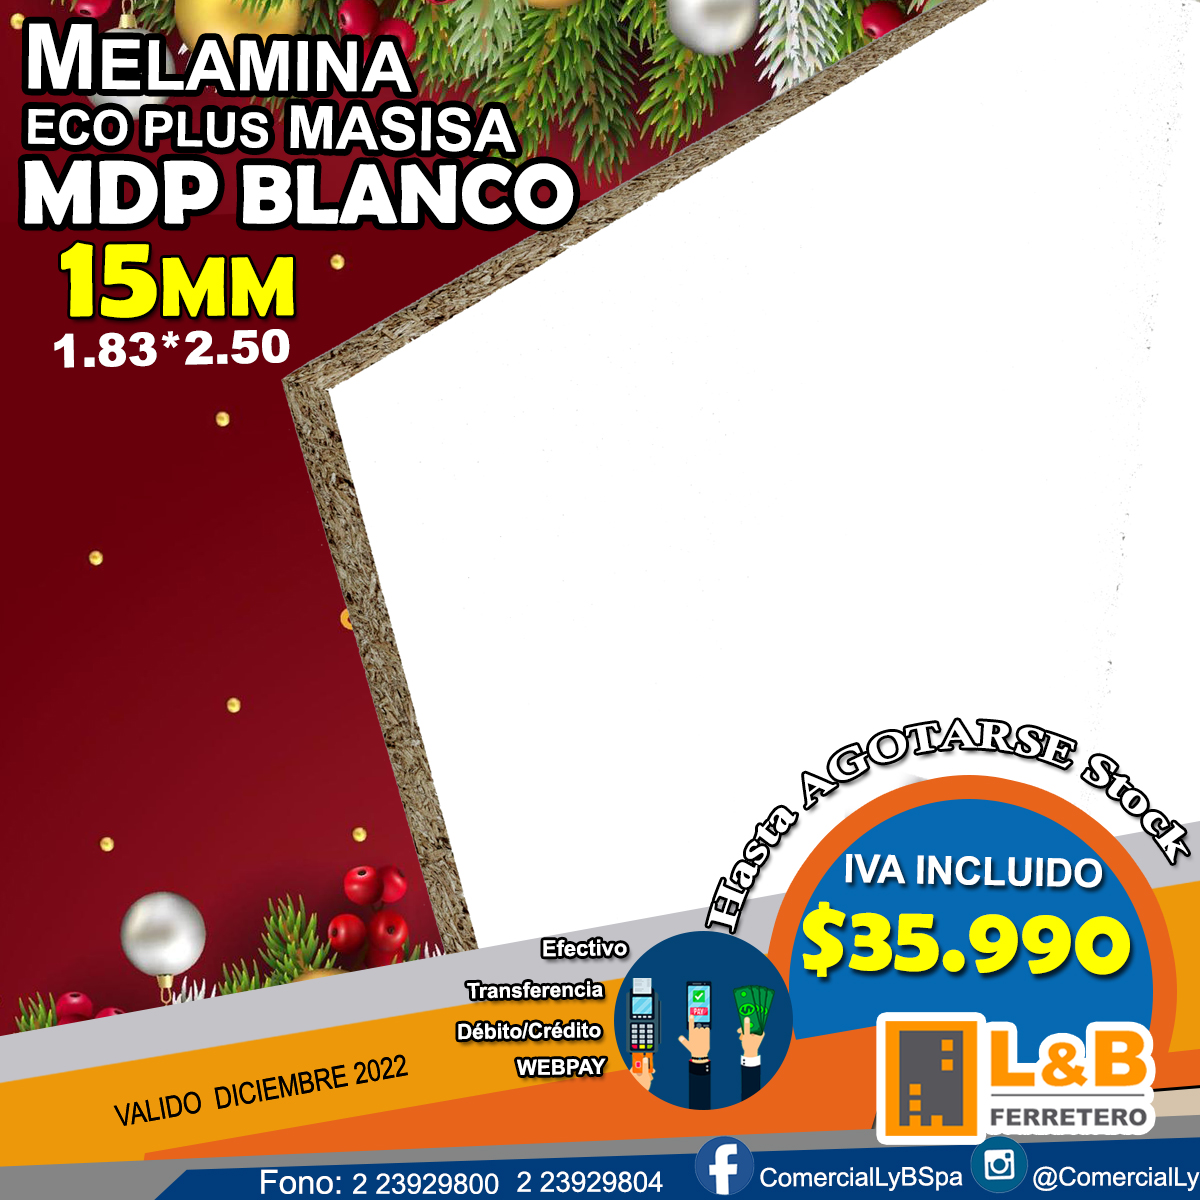 Melamina EcoPlus Masisa MDP Blanca 15mm 1.83*2.50